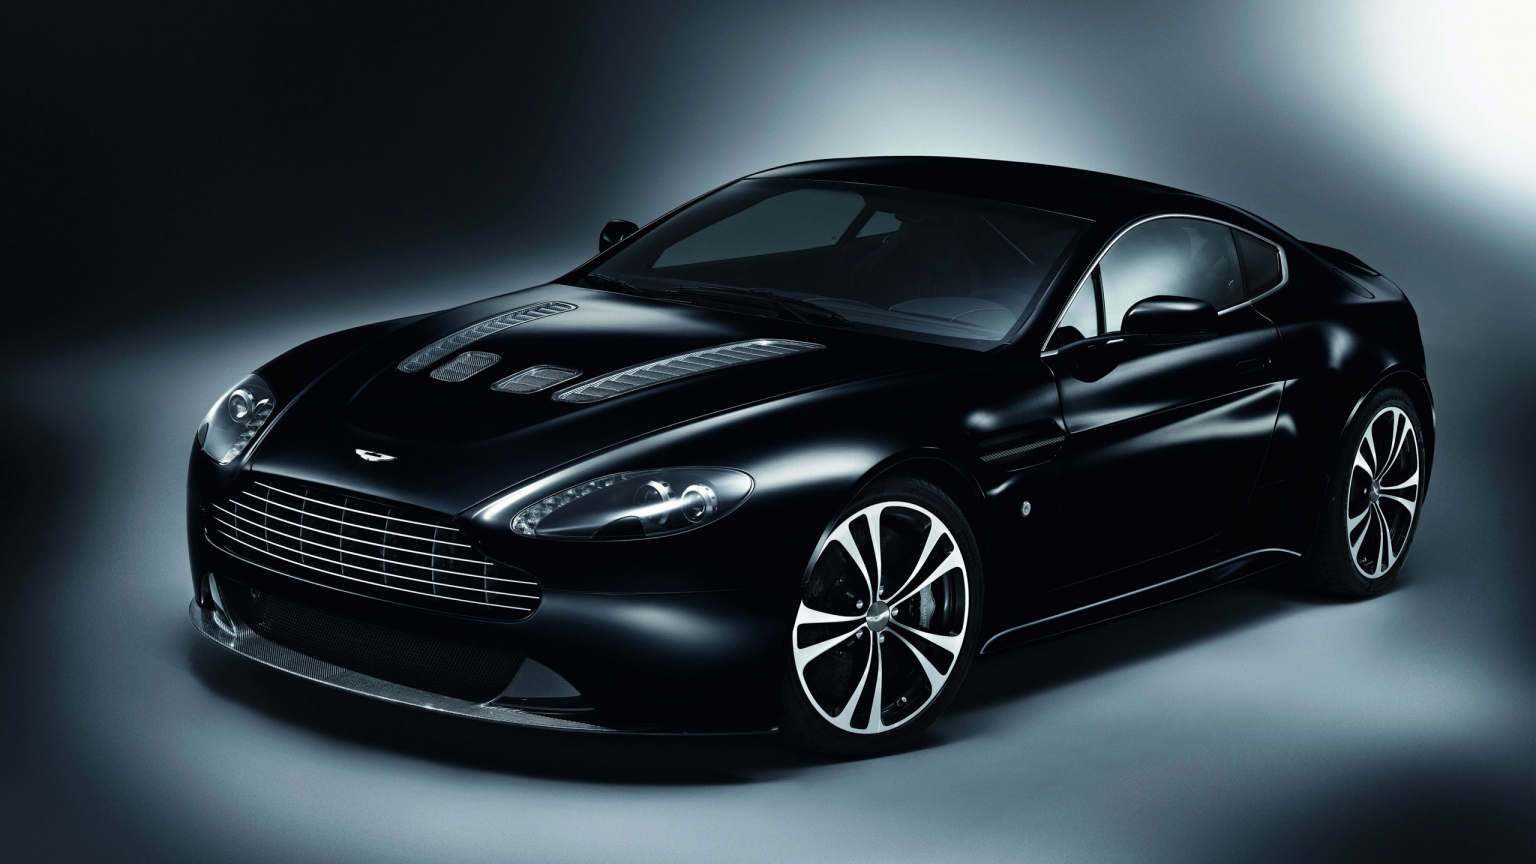 Aston Martin V12 Vantage Carbon Black for 1536 x 864 HDTV resolution